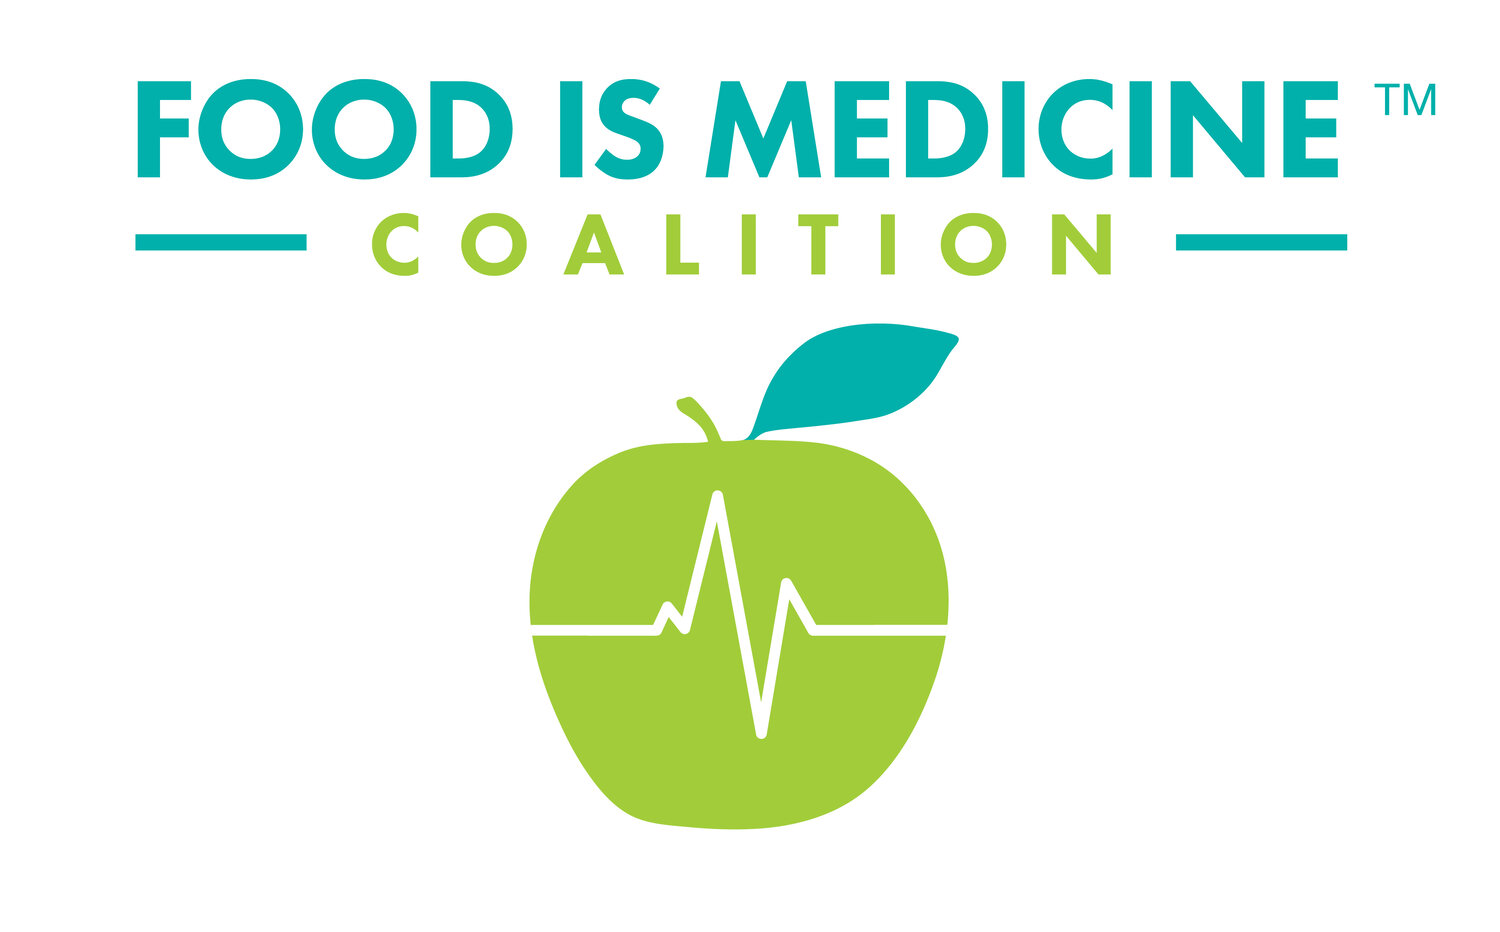 Food is Medicine Coalition